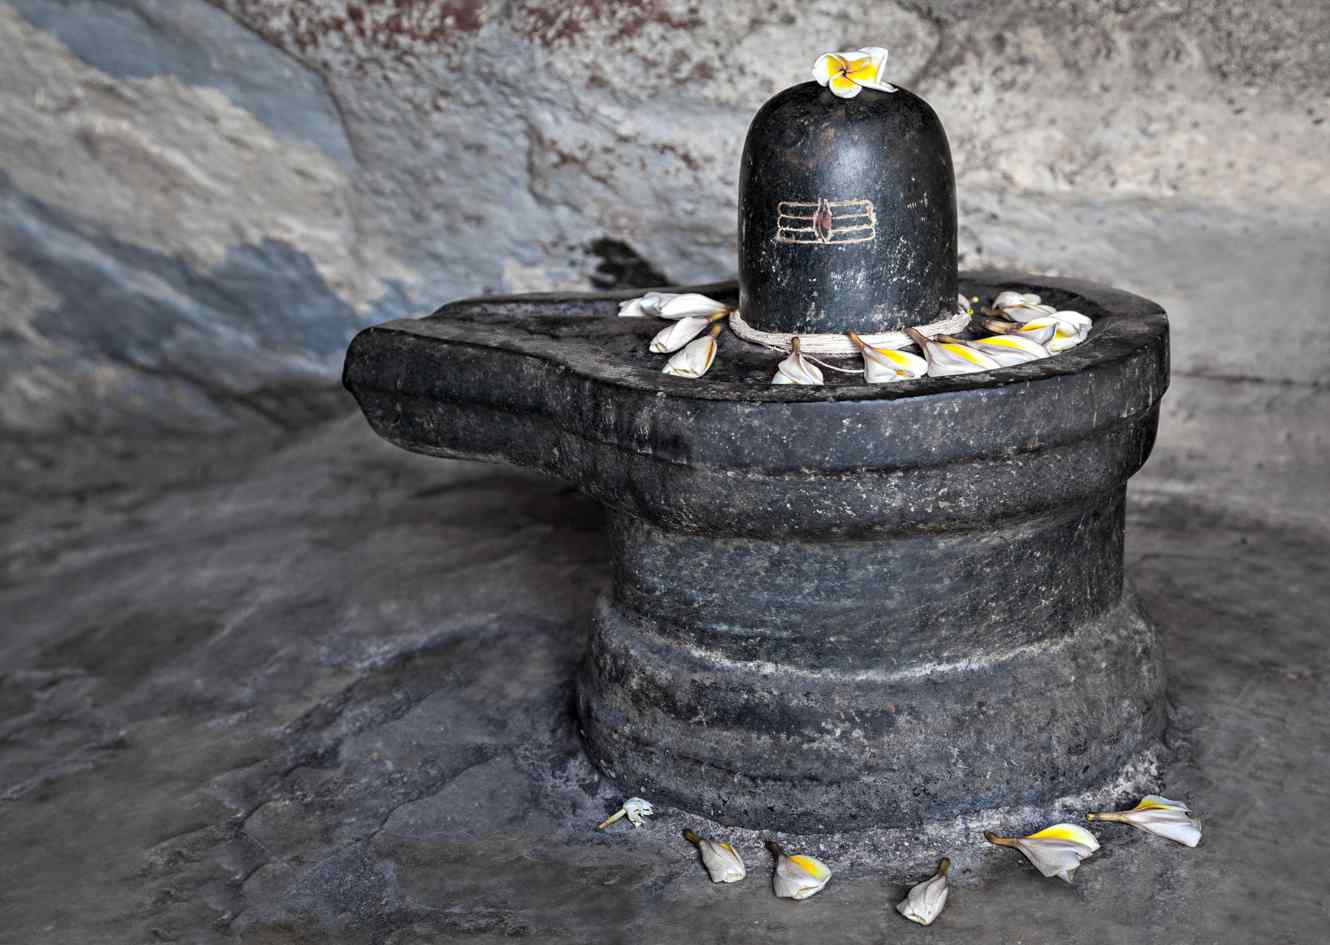 The Shiva Linga